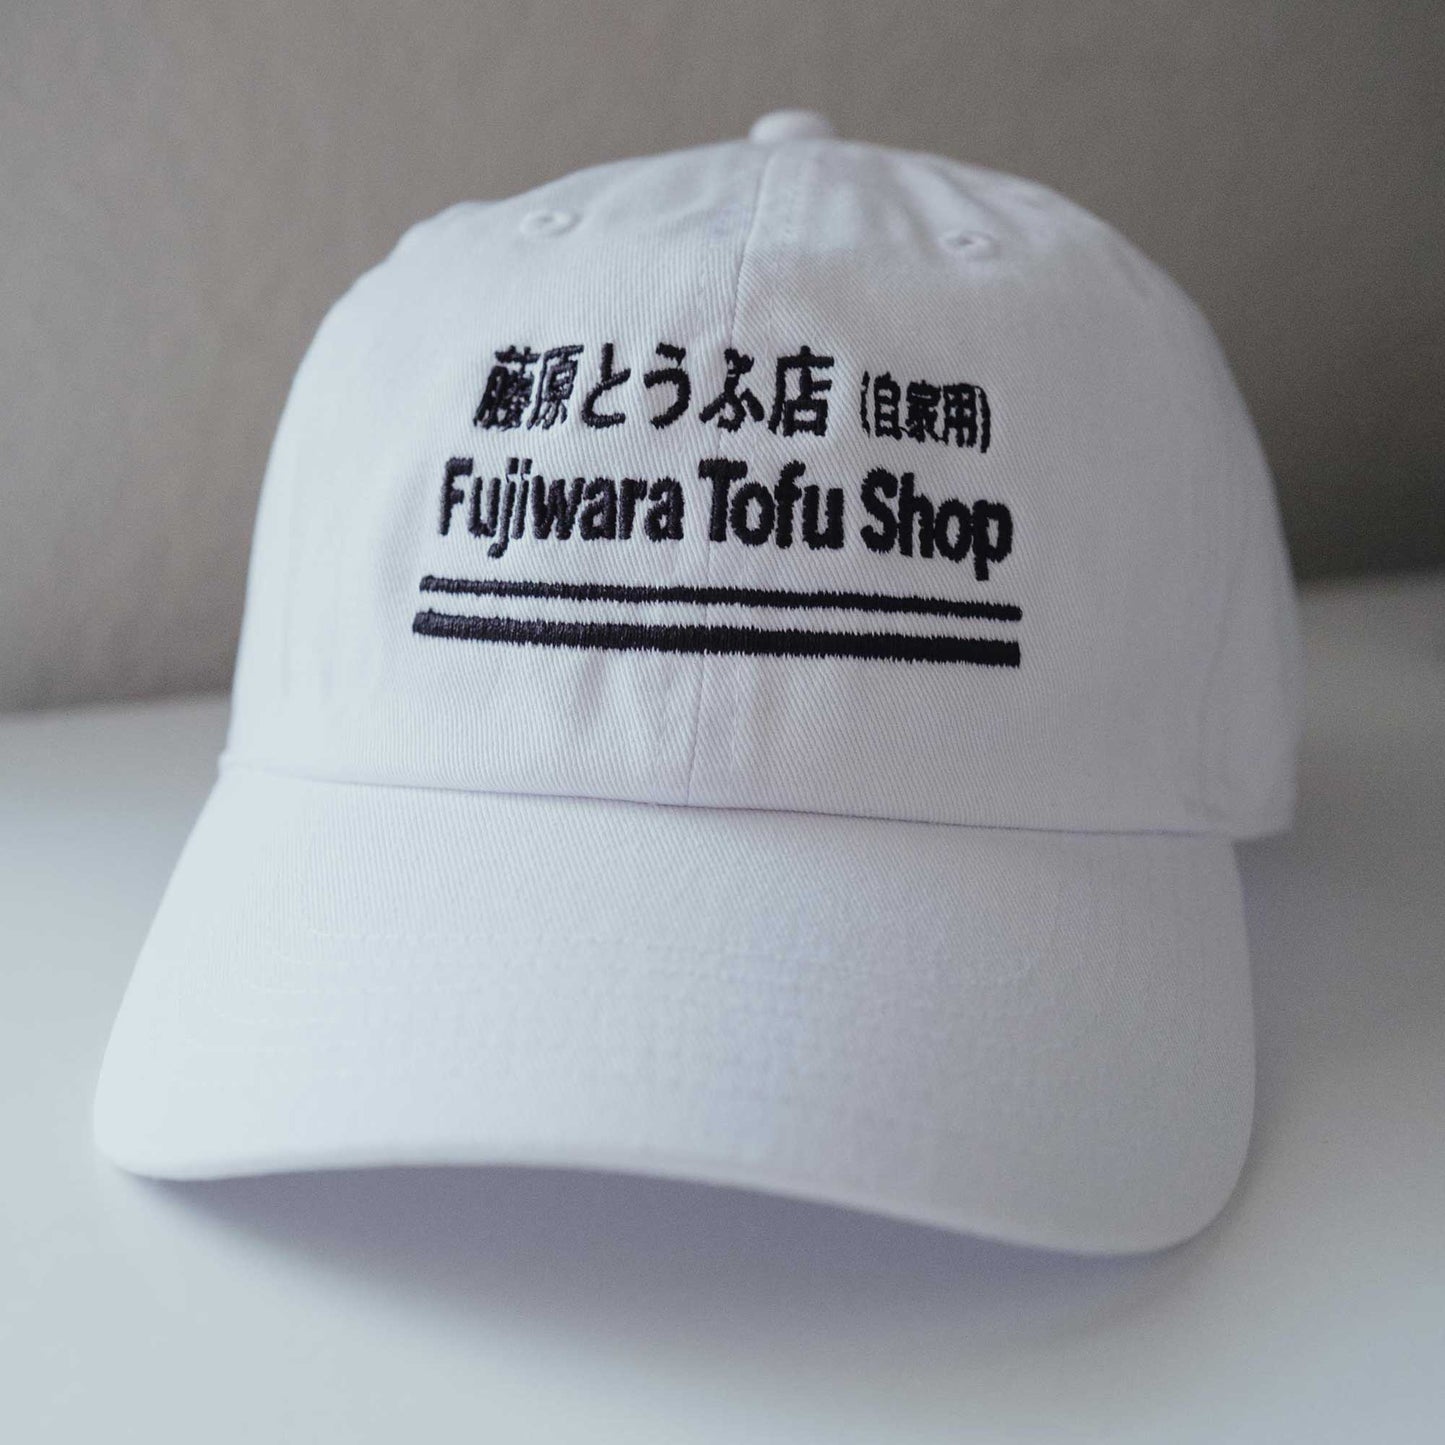 Fujiwara Tofu Shop Embroidered Hat